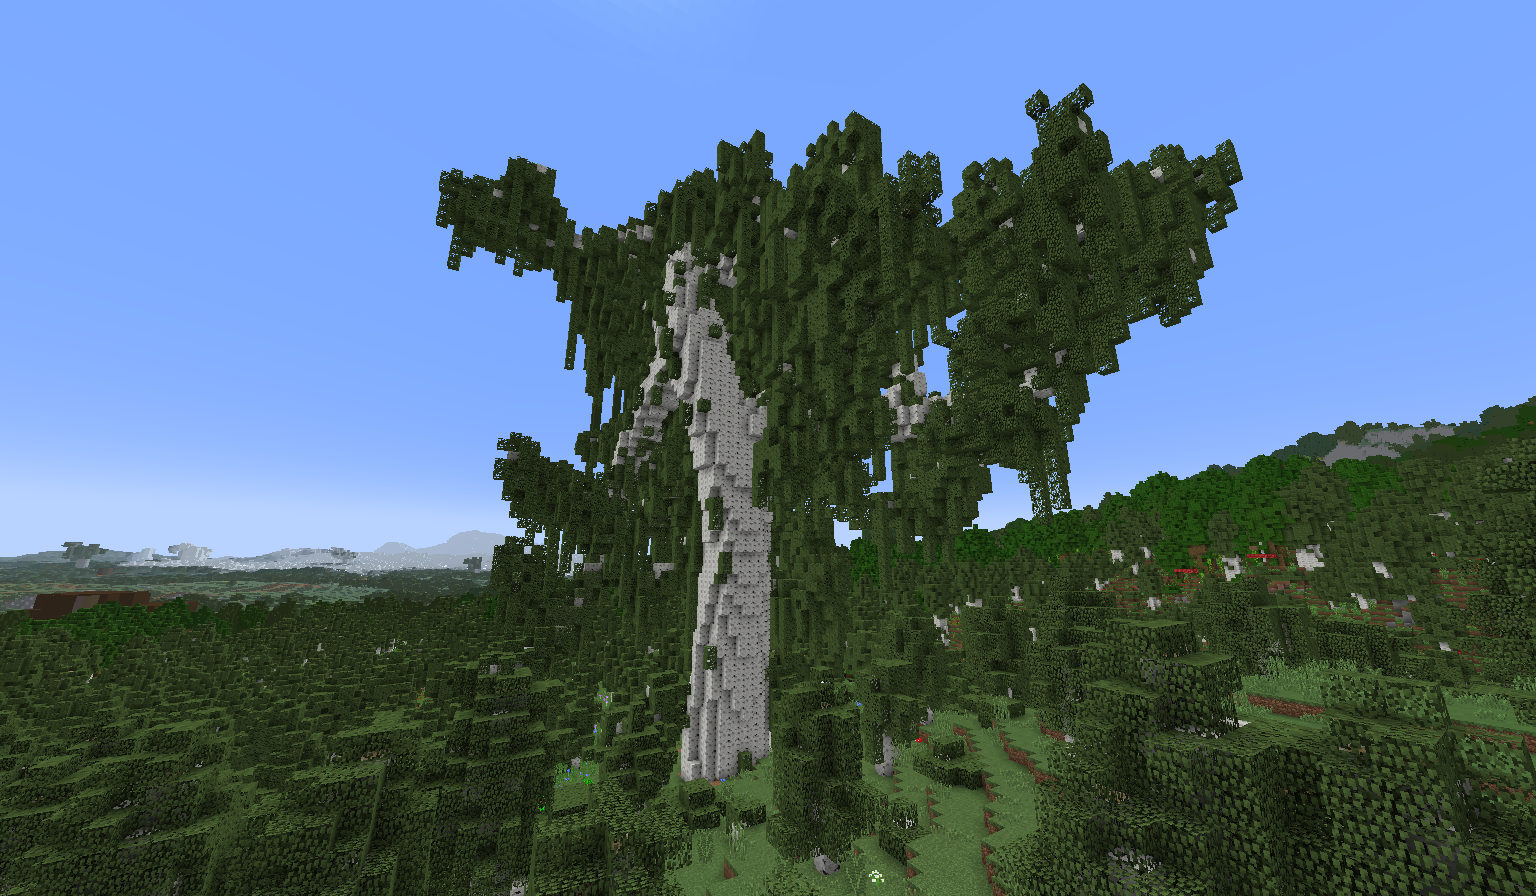 A mega tree